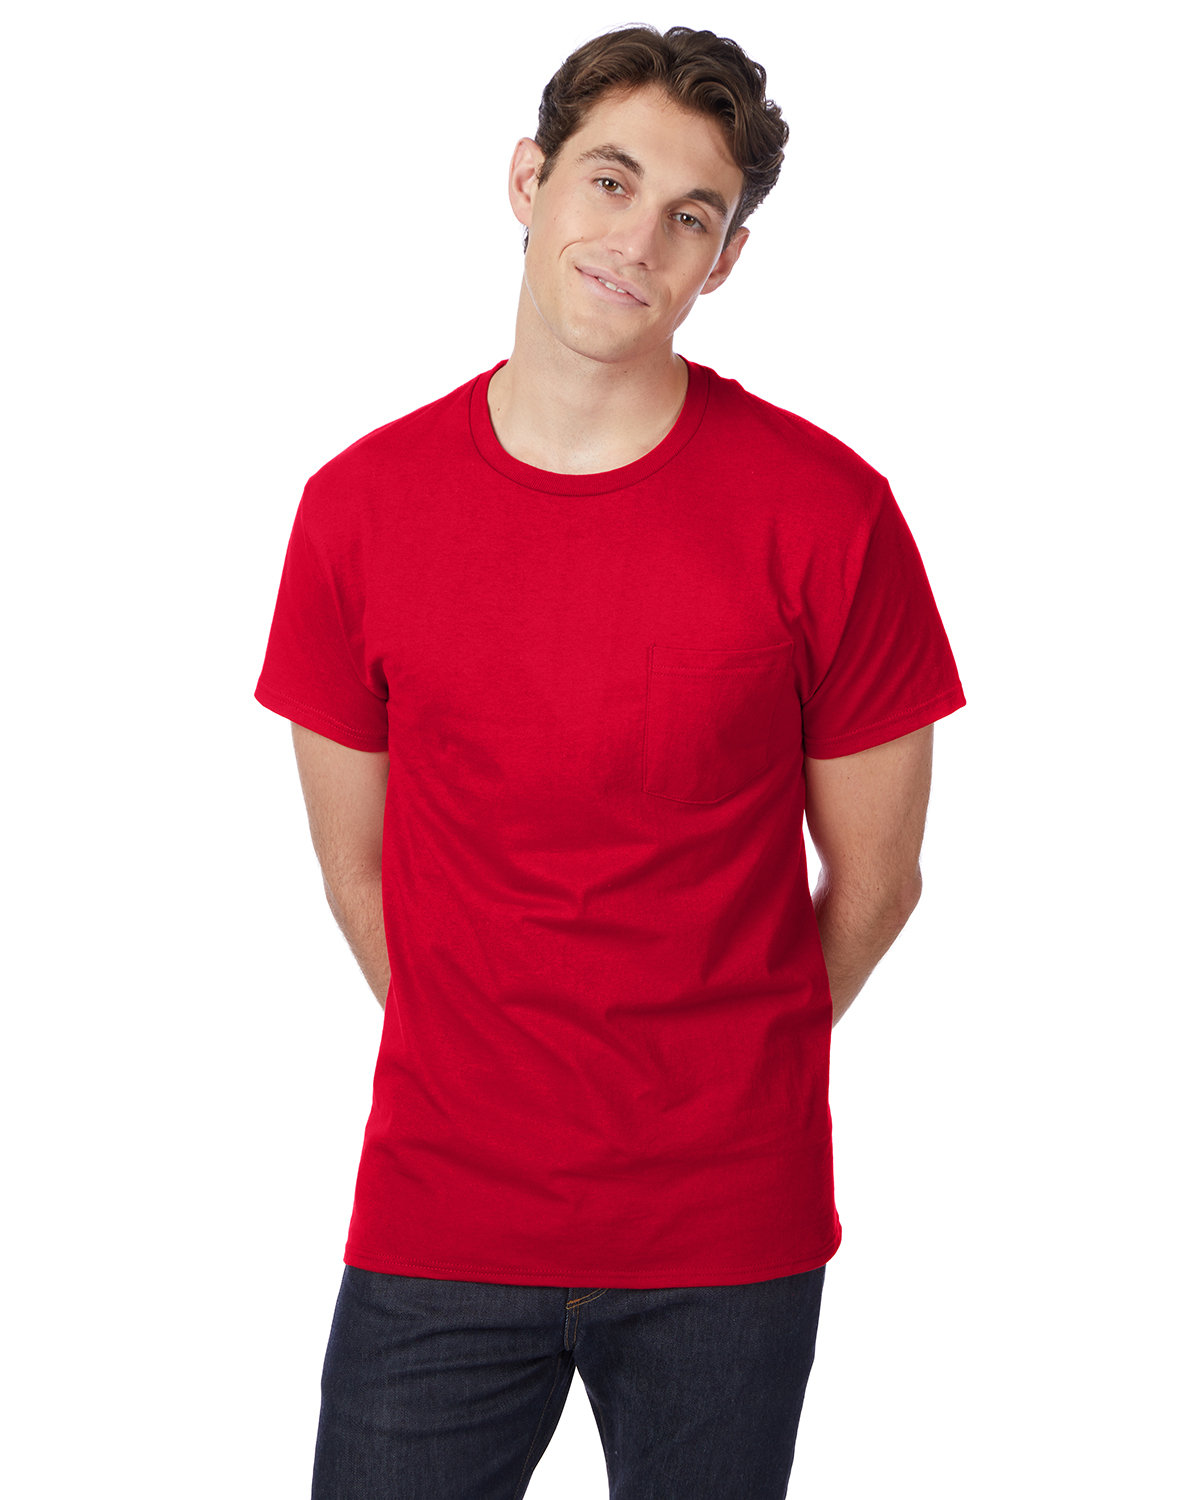 Hanes Men's Authentic-T Pocket T-Shirt deep red 